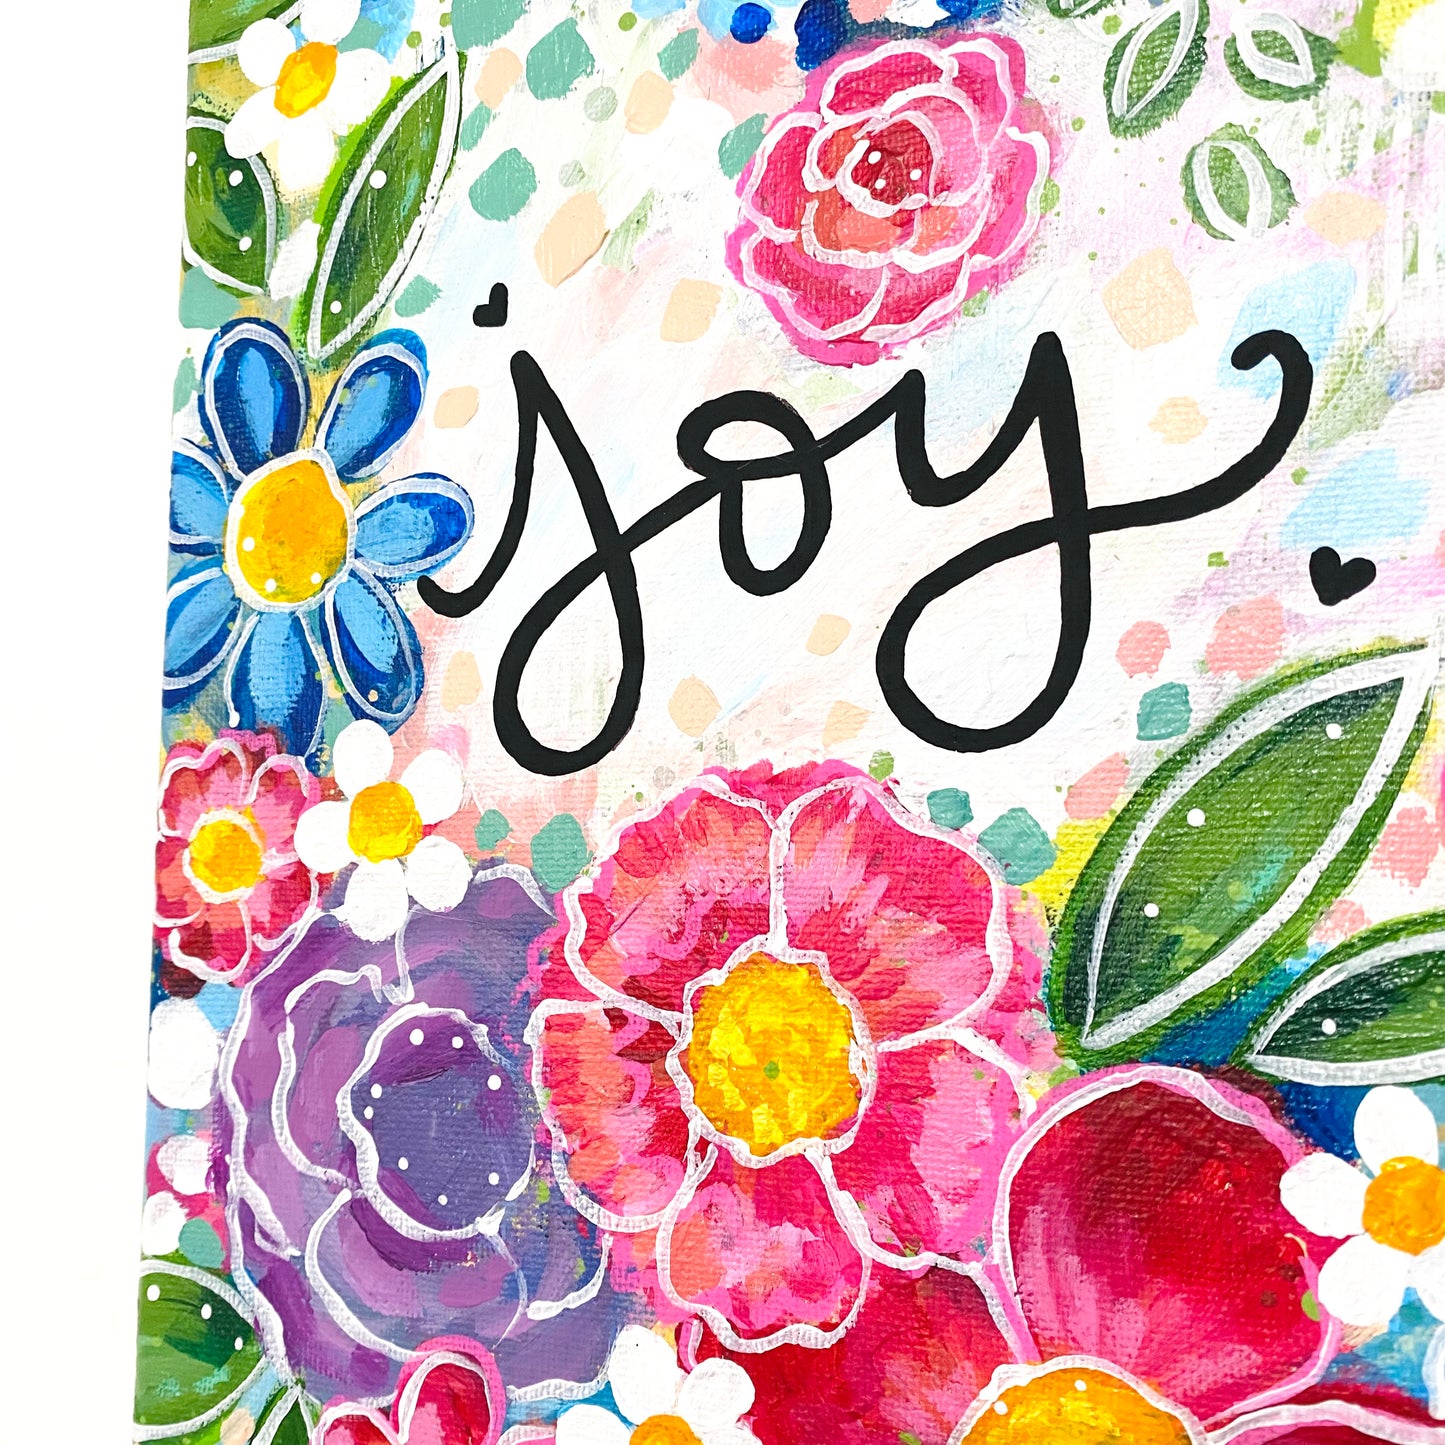 "Joyful Blooms” 8x10 inch original painting on canvas